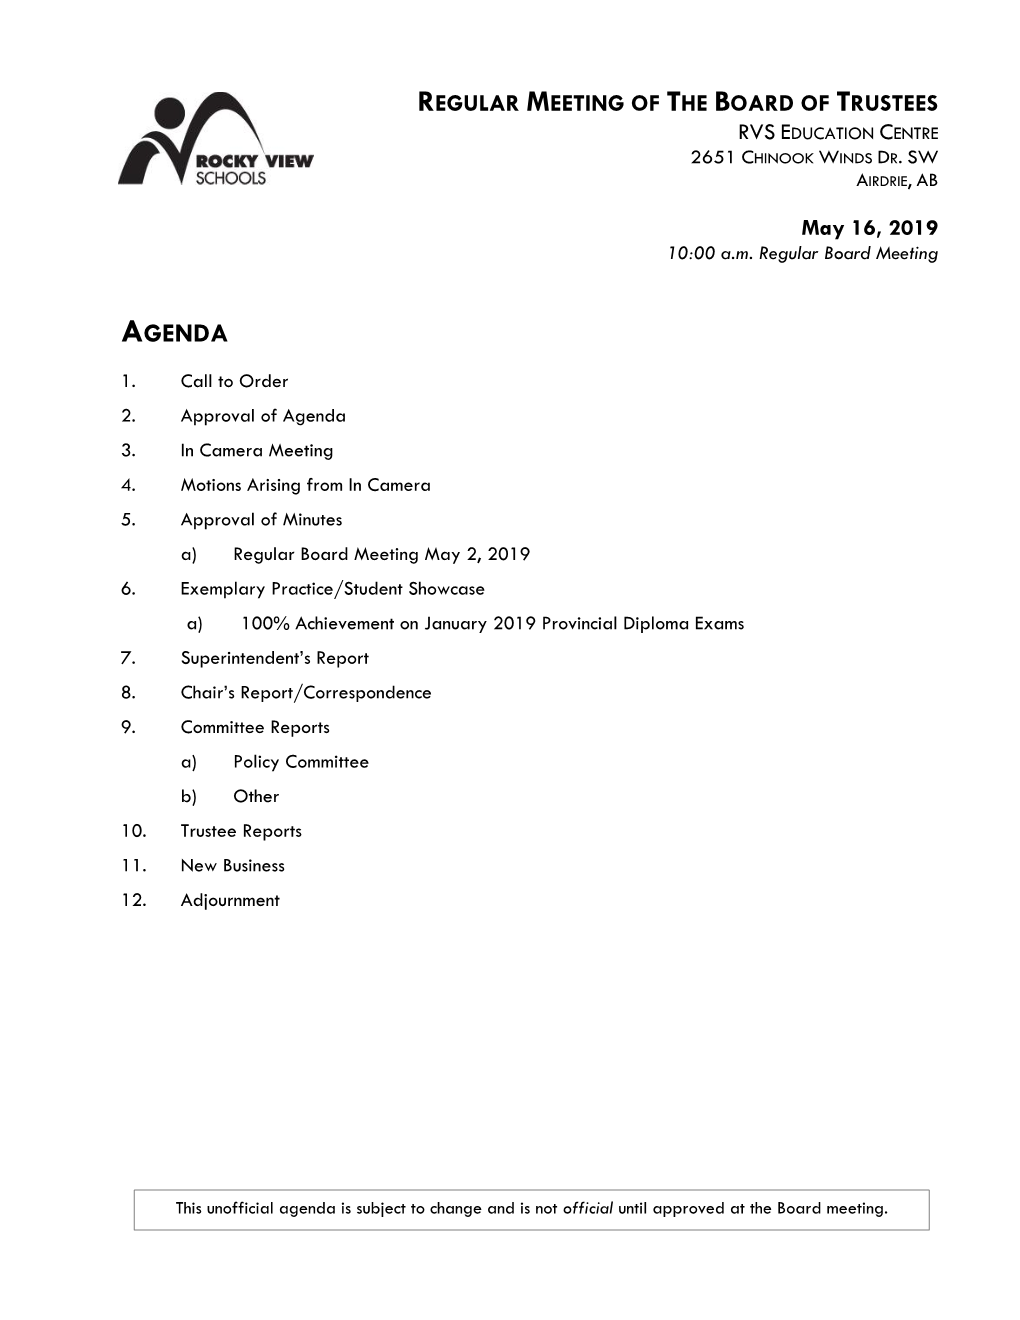 Board Agenda May 16, 2019